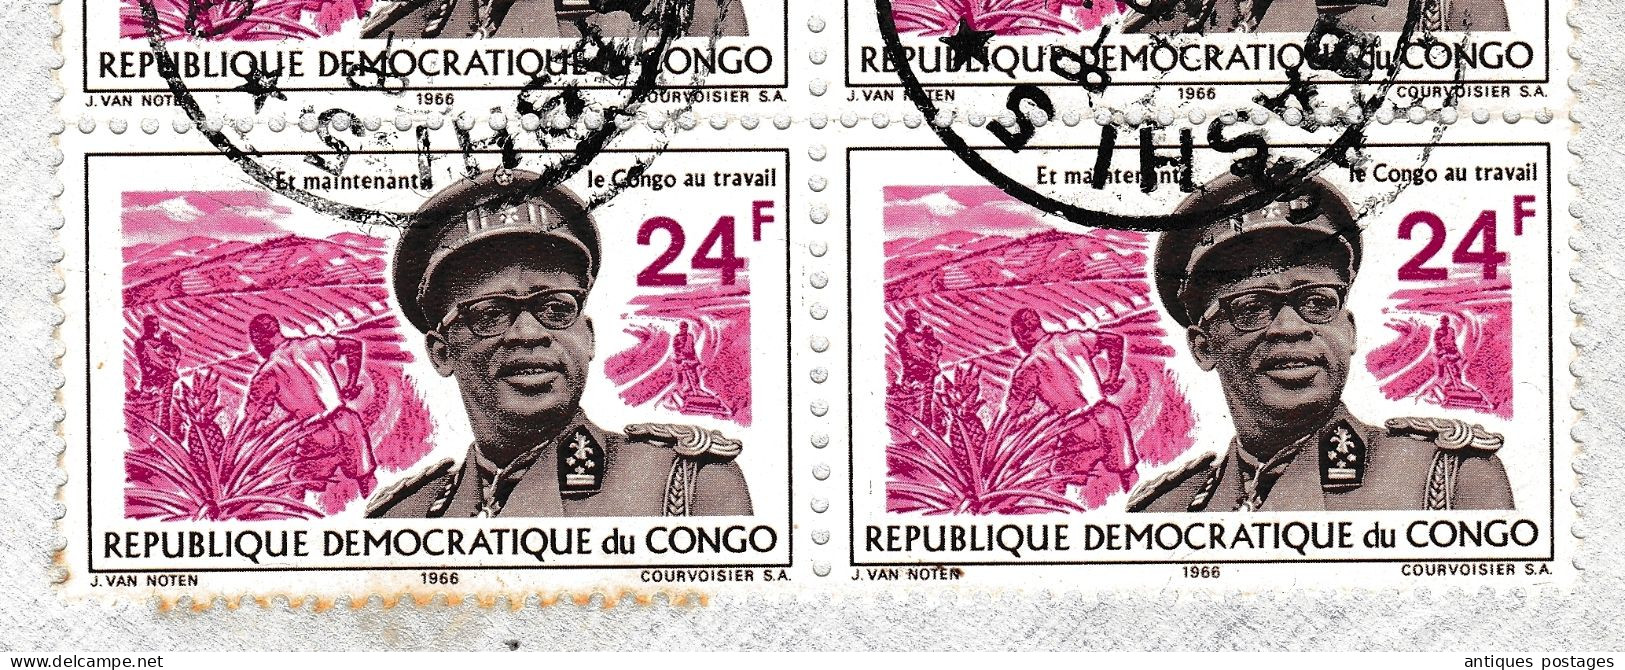 Lubumbashi Kapanga République Démocratique du Congo Montet Suisse Institut Marini Mission Catholique Mobutu Sese Seko